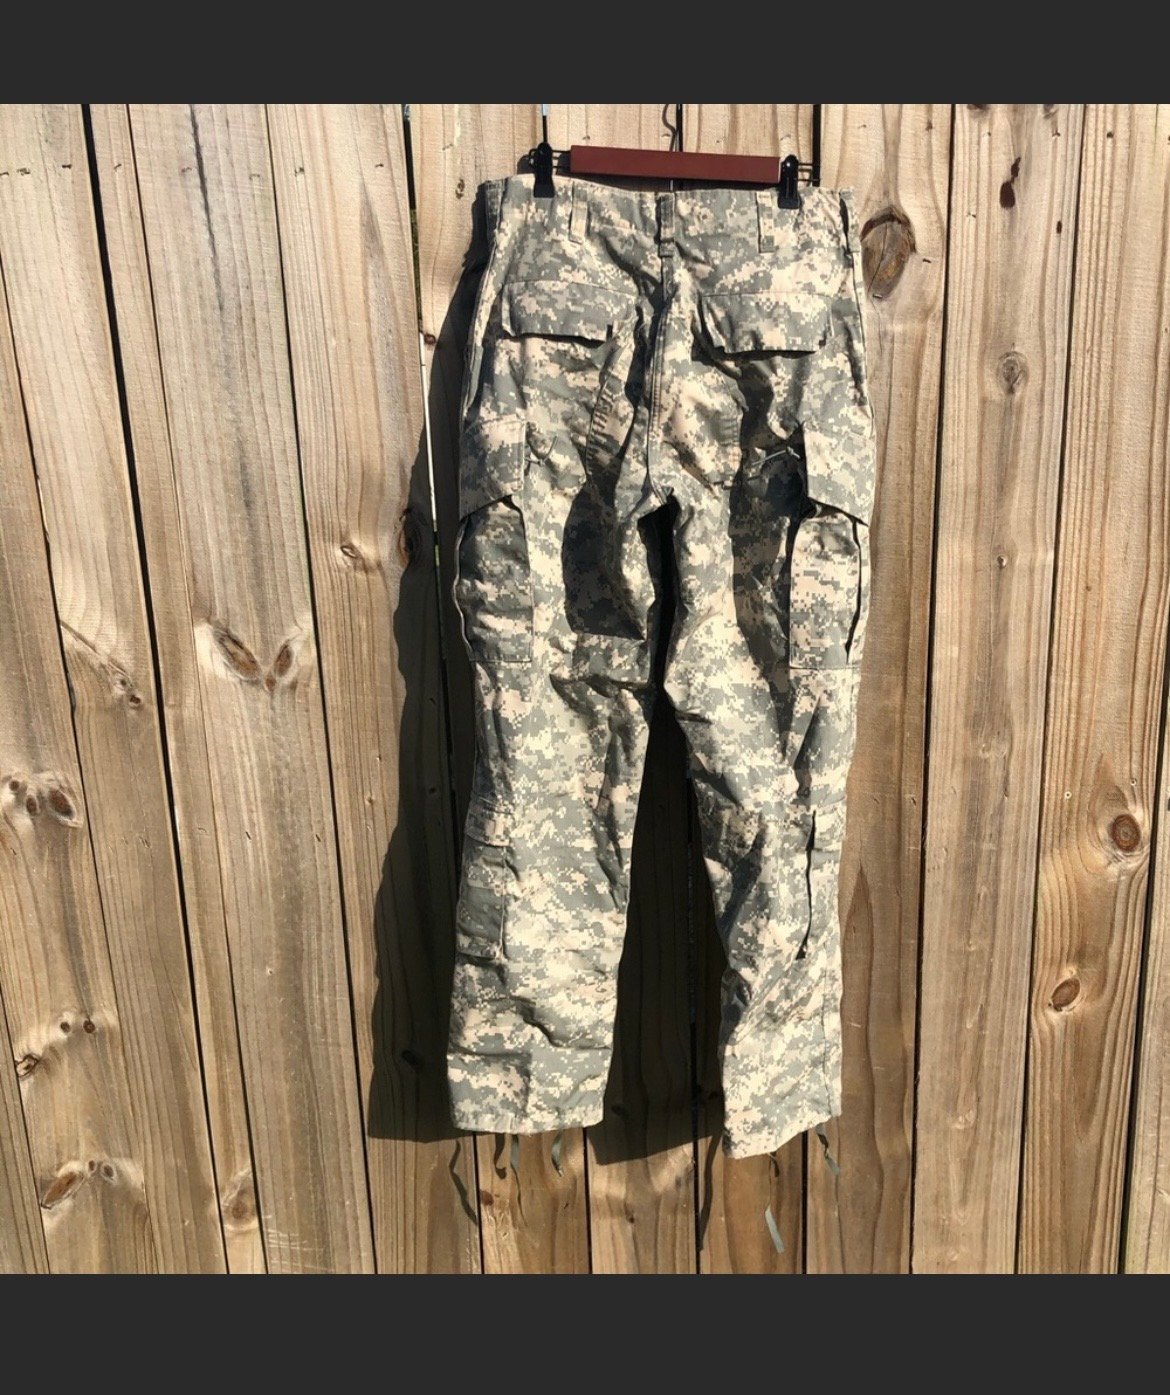 Image of US Army Digi camo pants